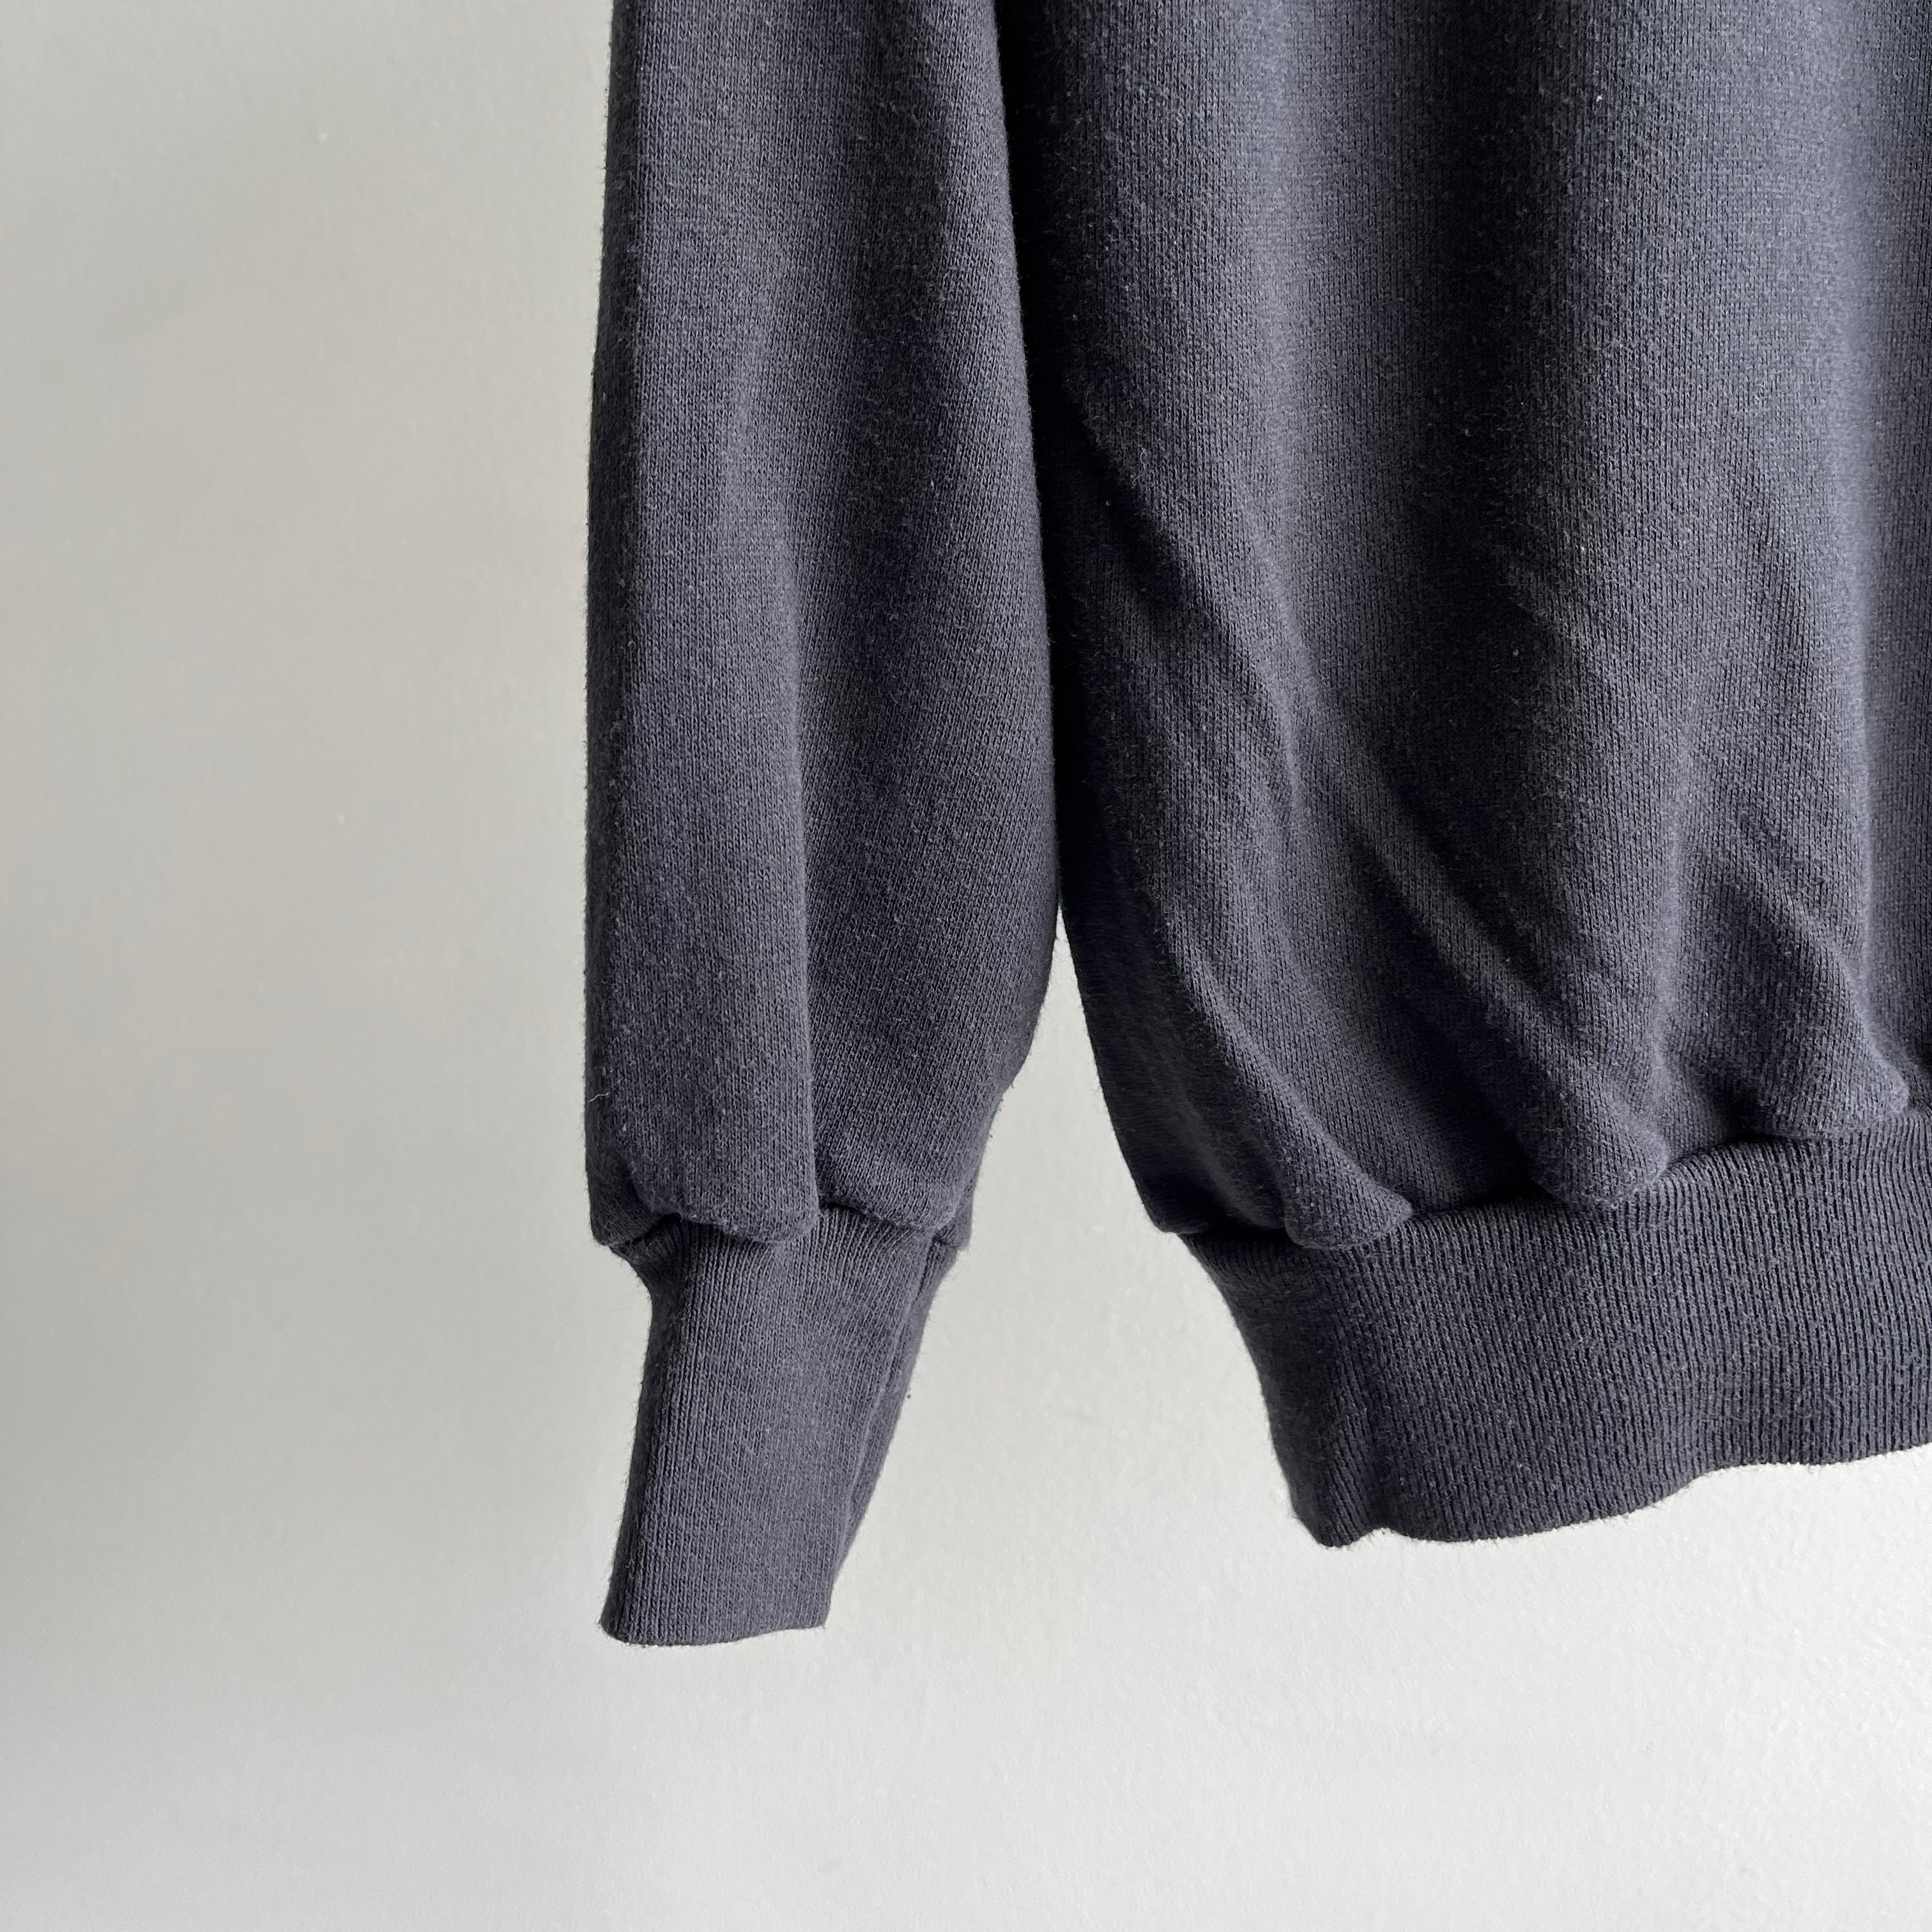 1980s Blank Black Raglan Sweatshirt